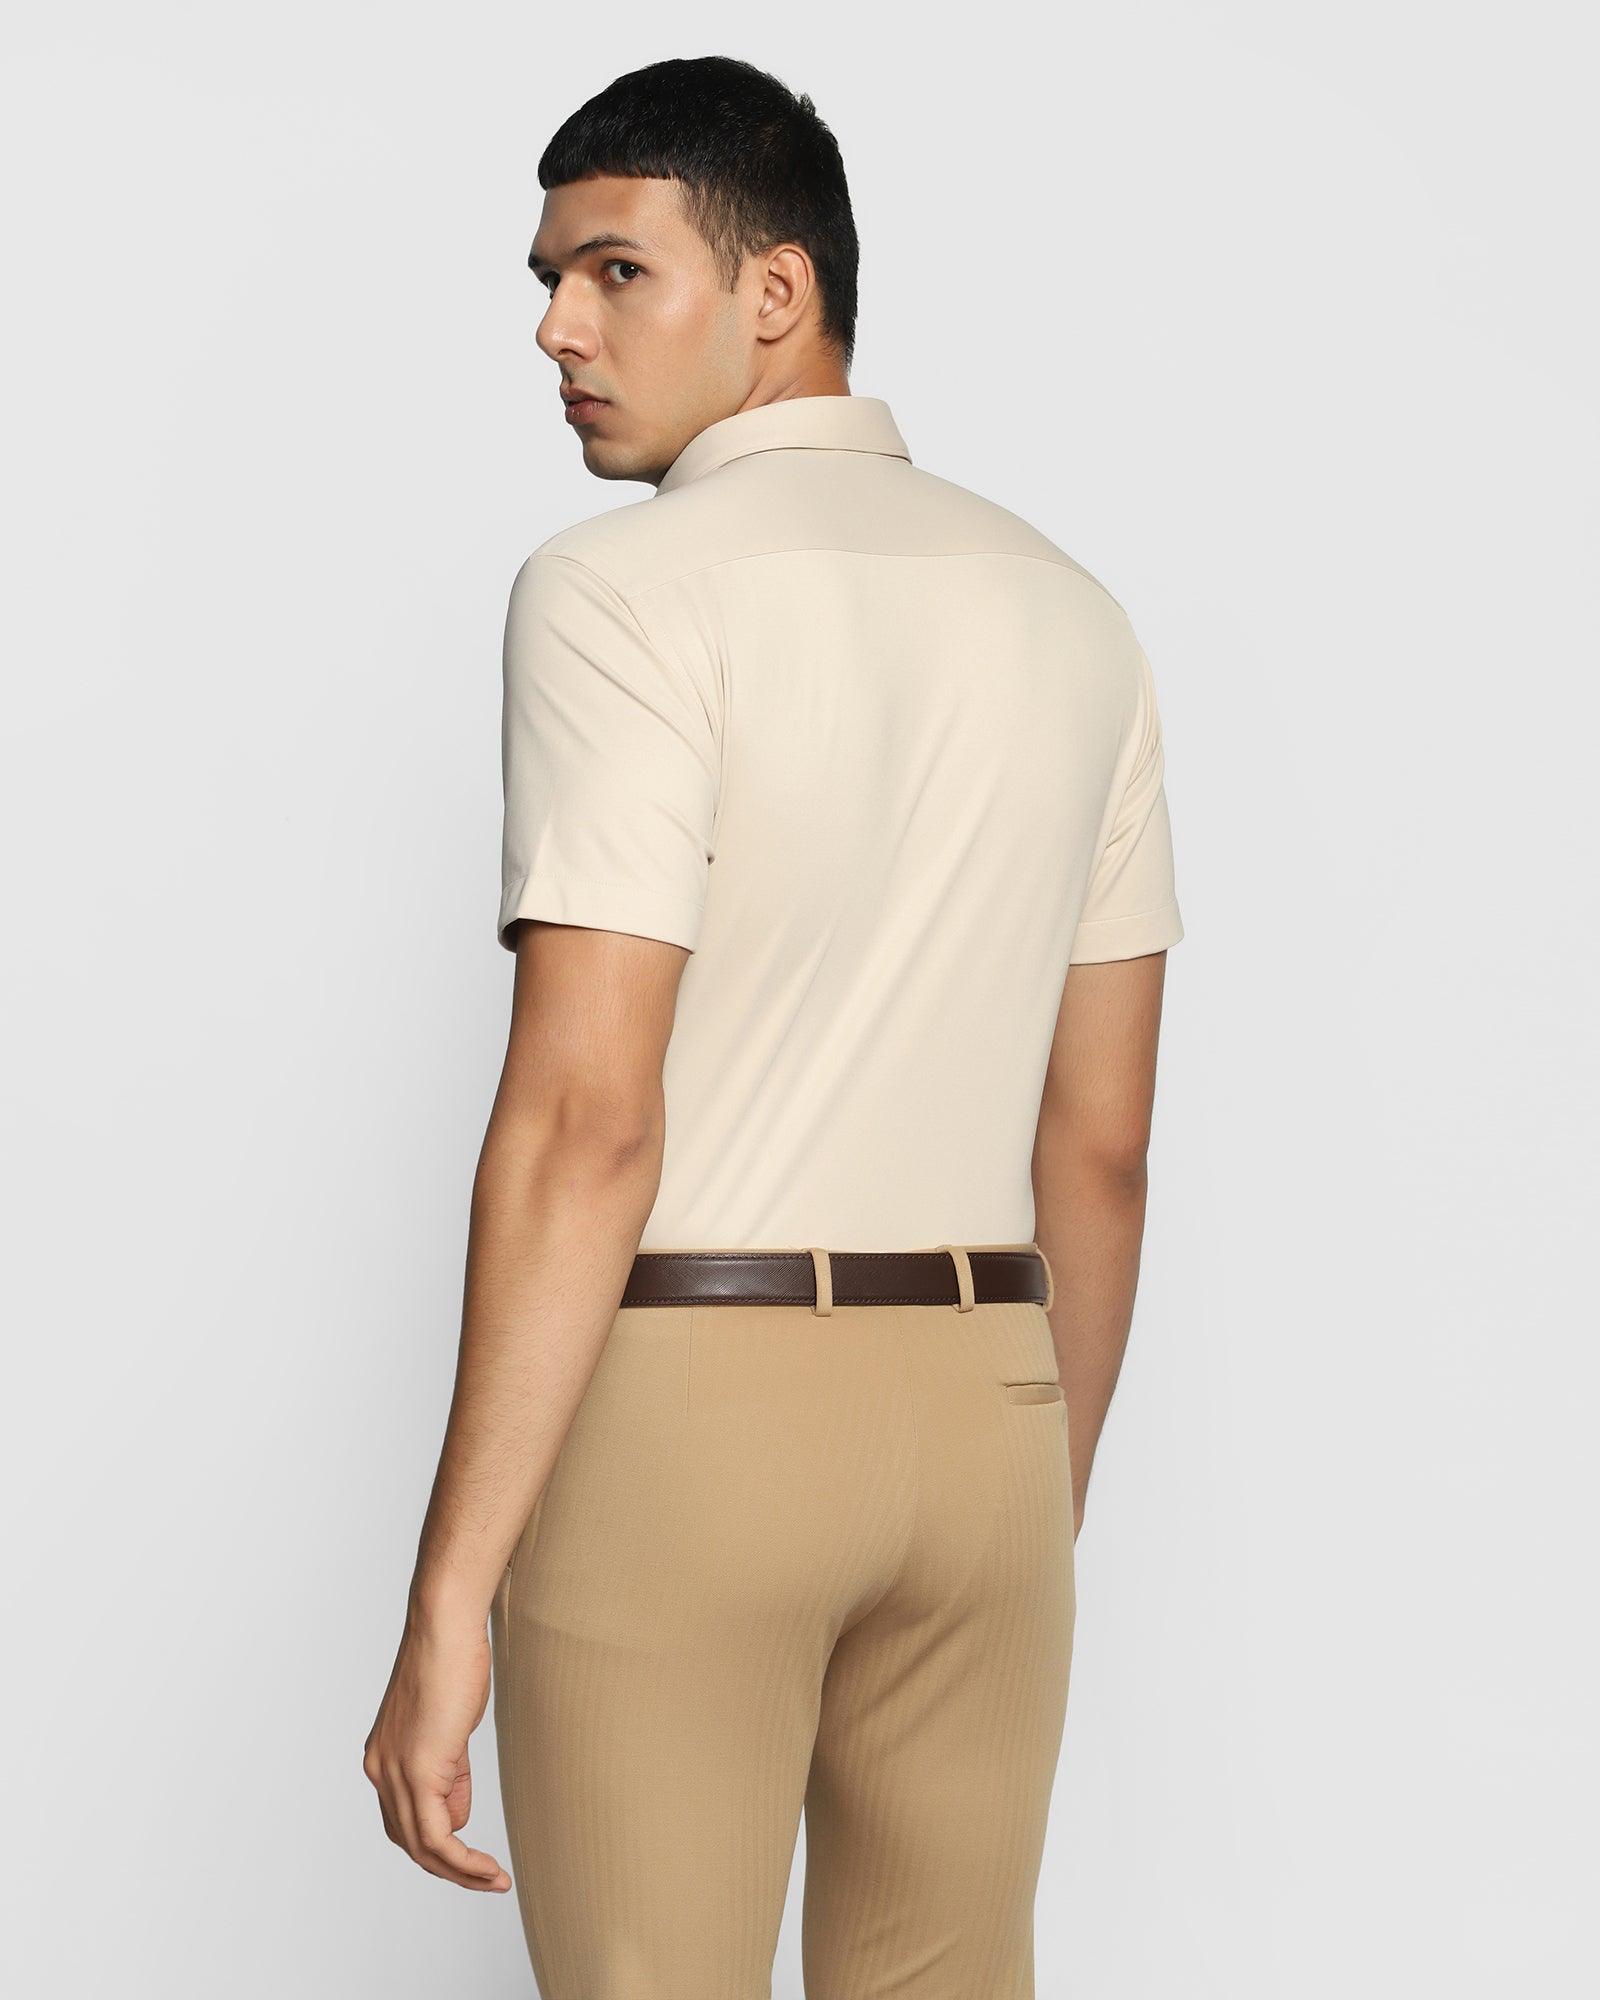 TechPro Formal Half Sleeve Beige Solid Shirt - Payback